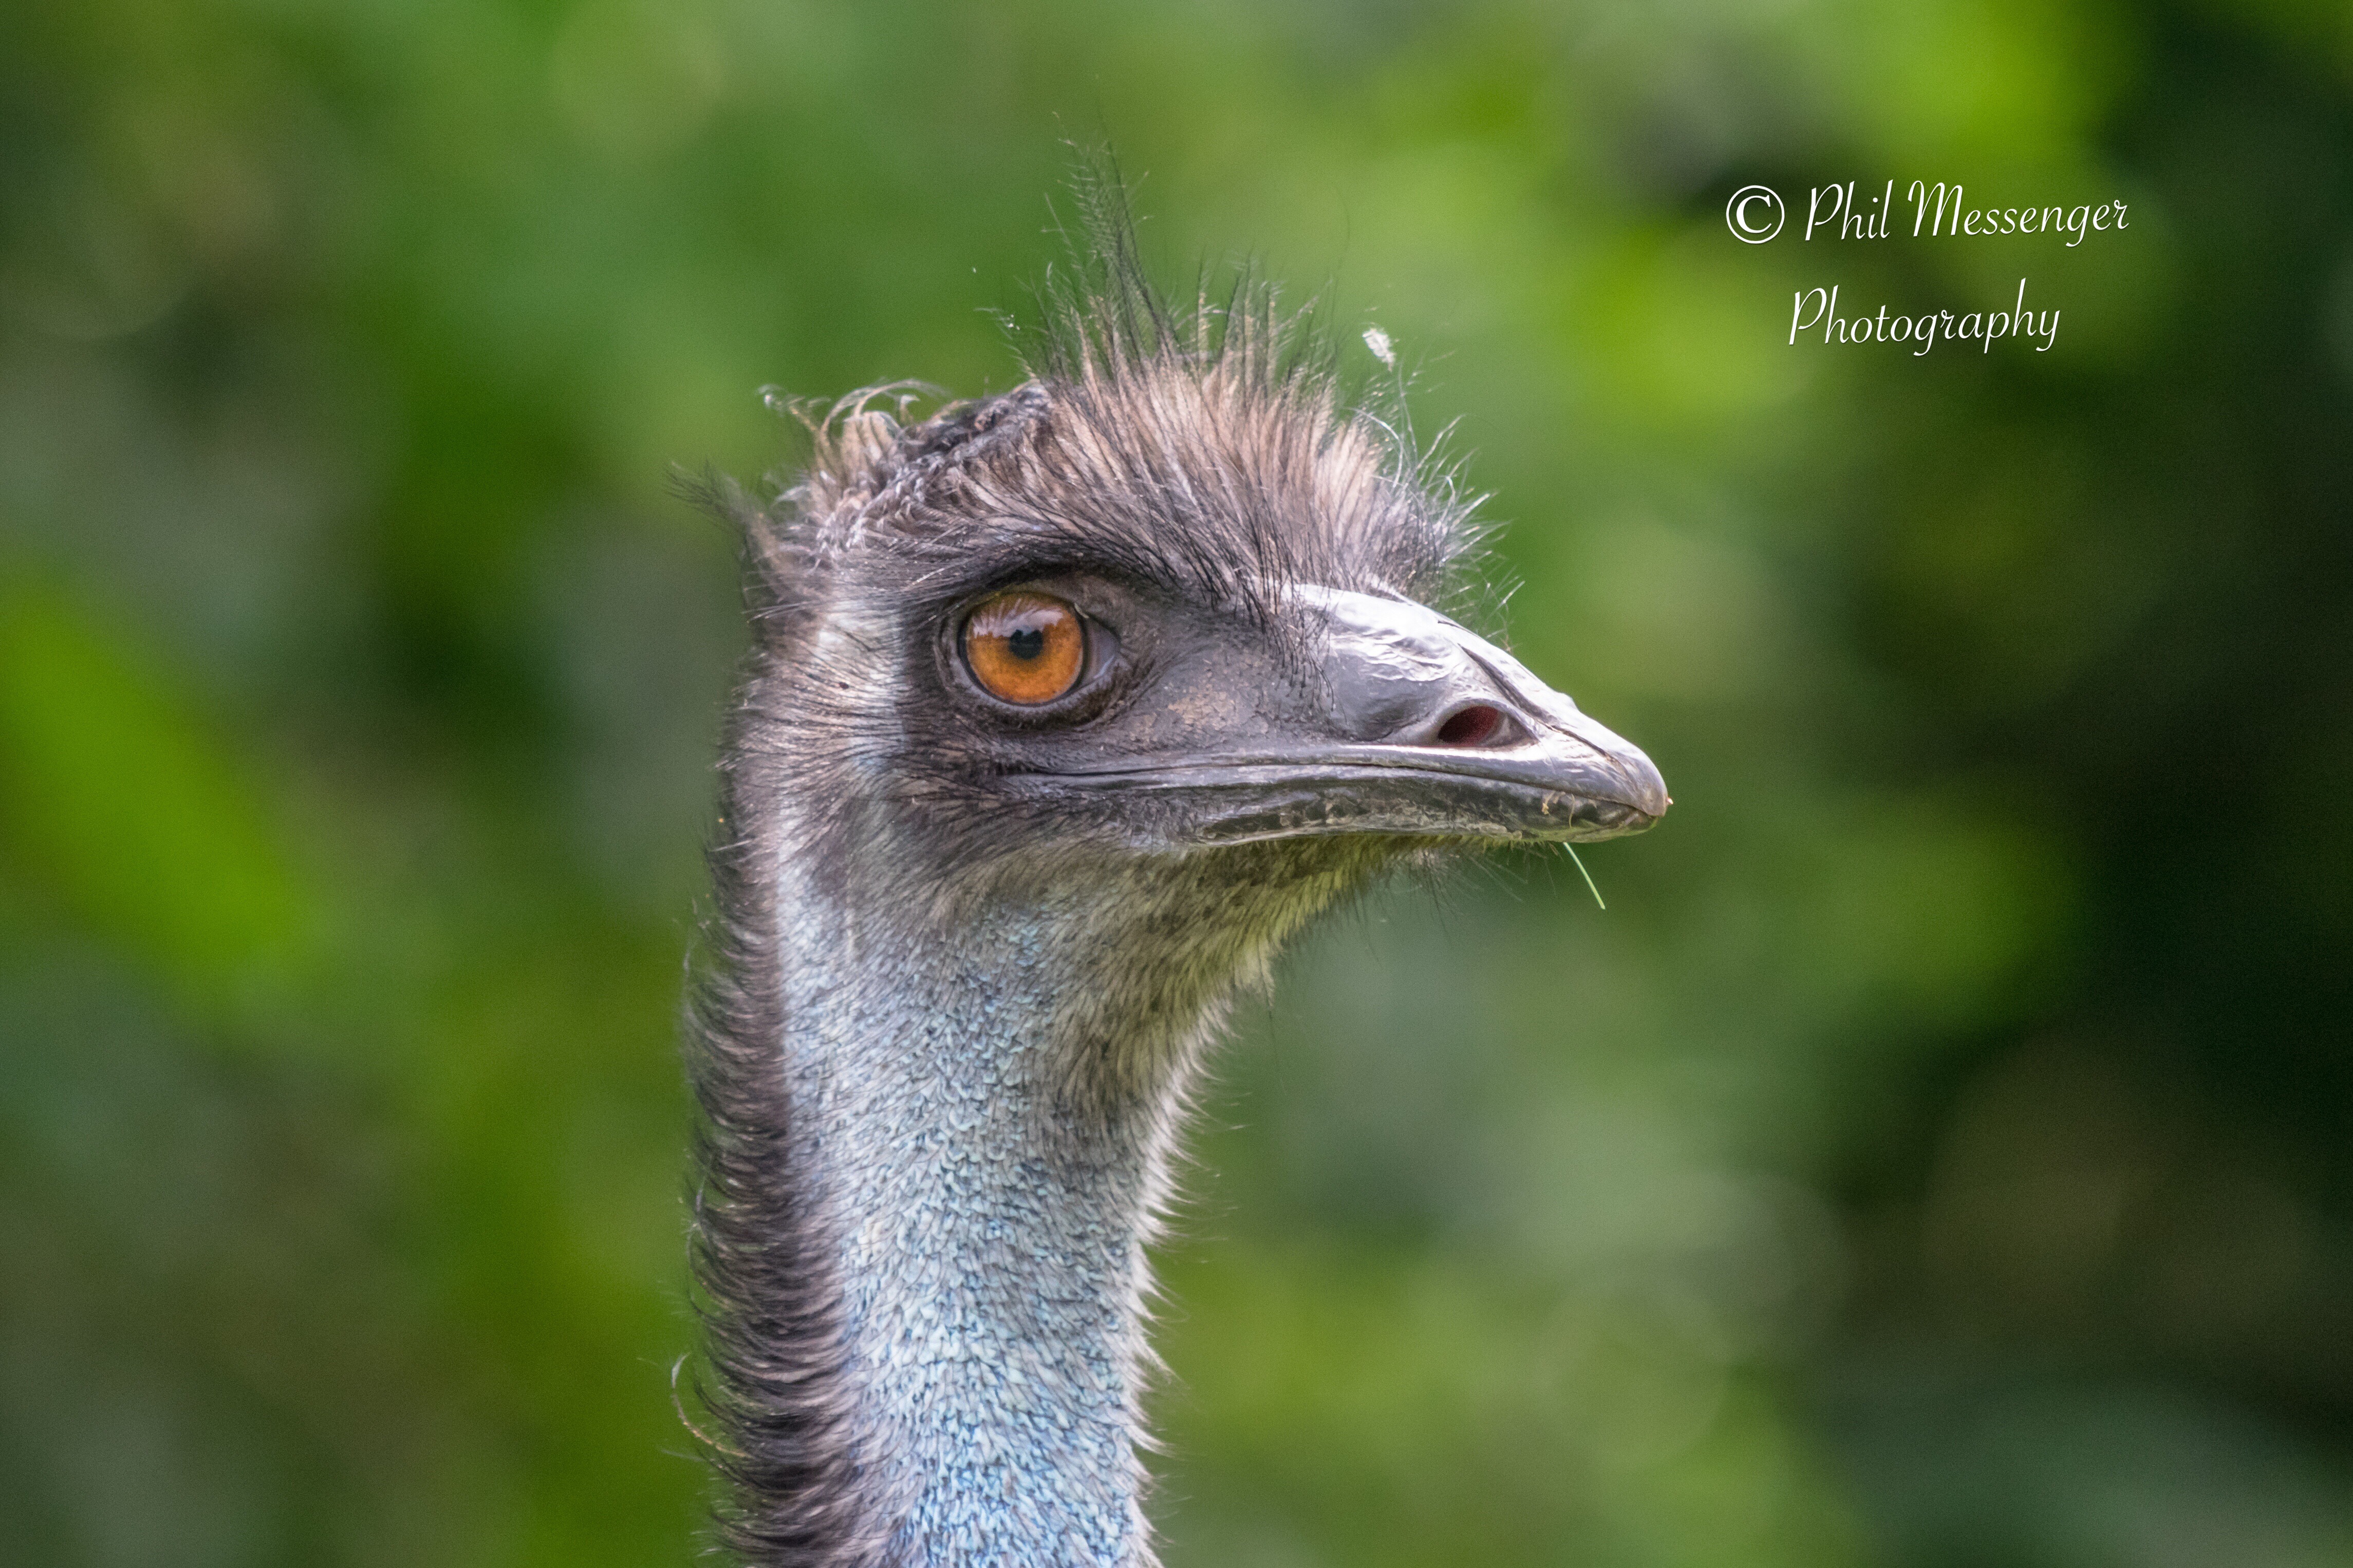 Emu portrait taken at Cotswold wildlife park, Burford, Oxfordshire.